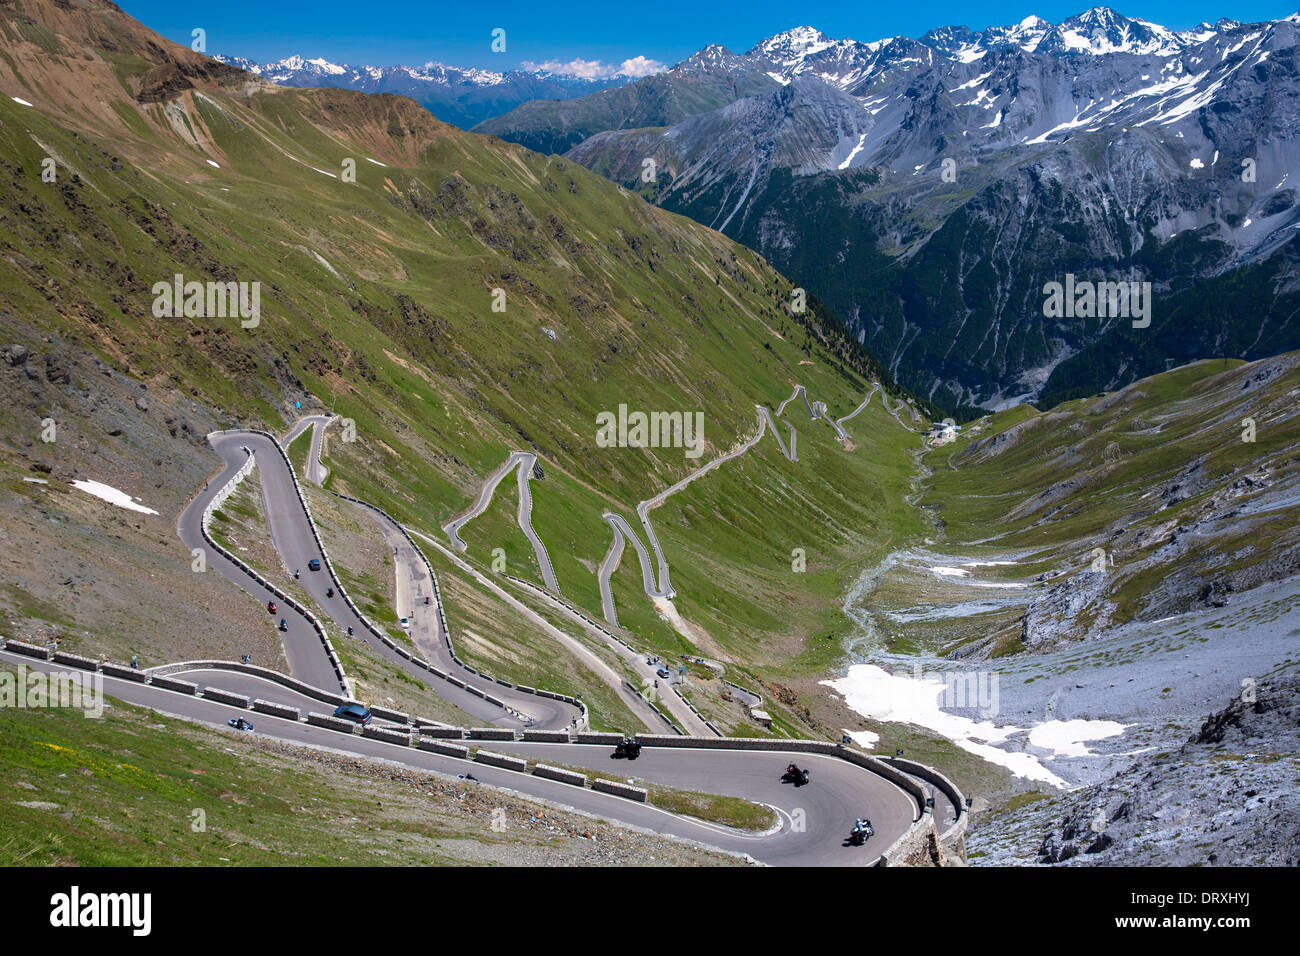 Cars on The Stelvio Pass, Passo dello Stelvio, Stilfser Joch, on the route to Bormio, in the Eastern Alps in Northern Italy Stock Photo